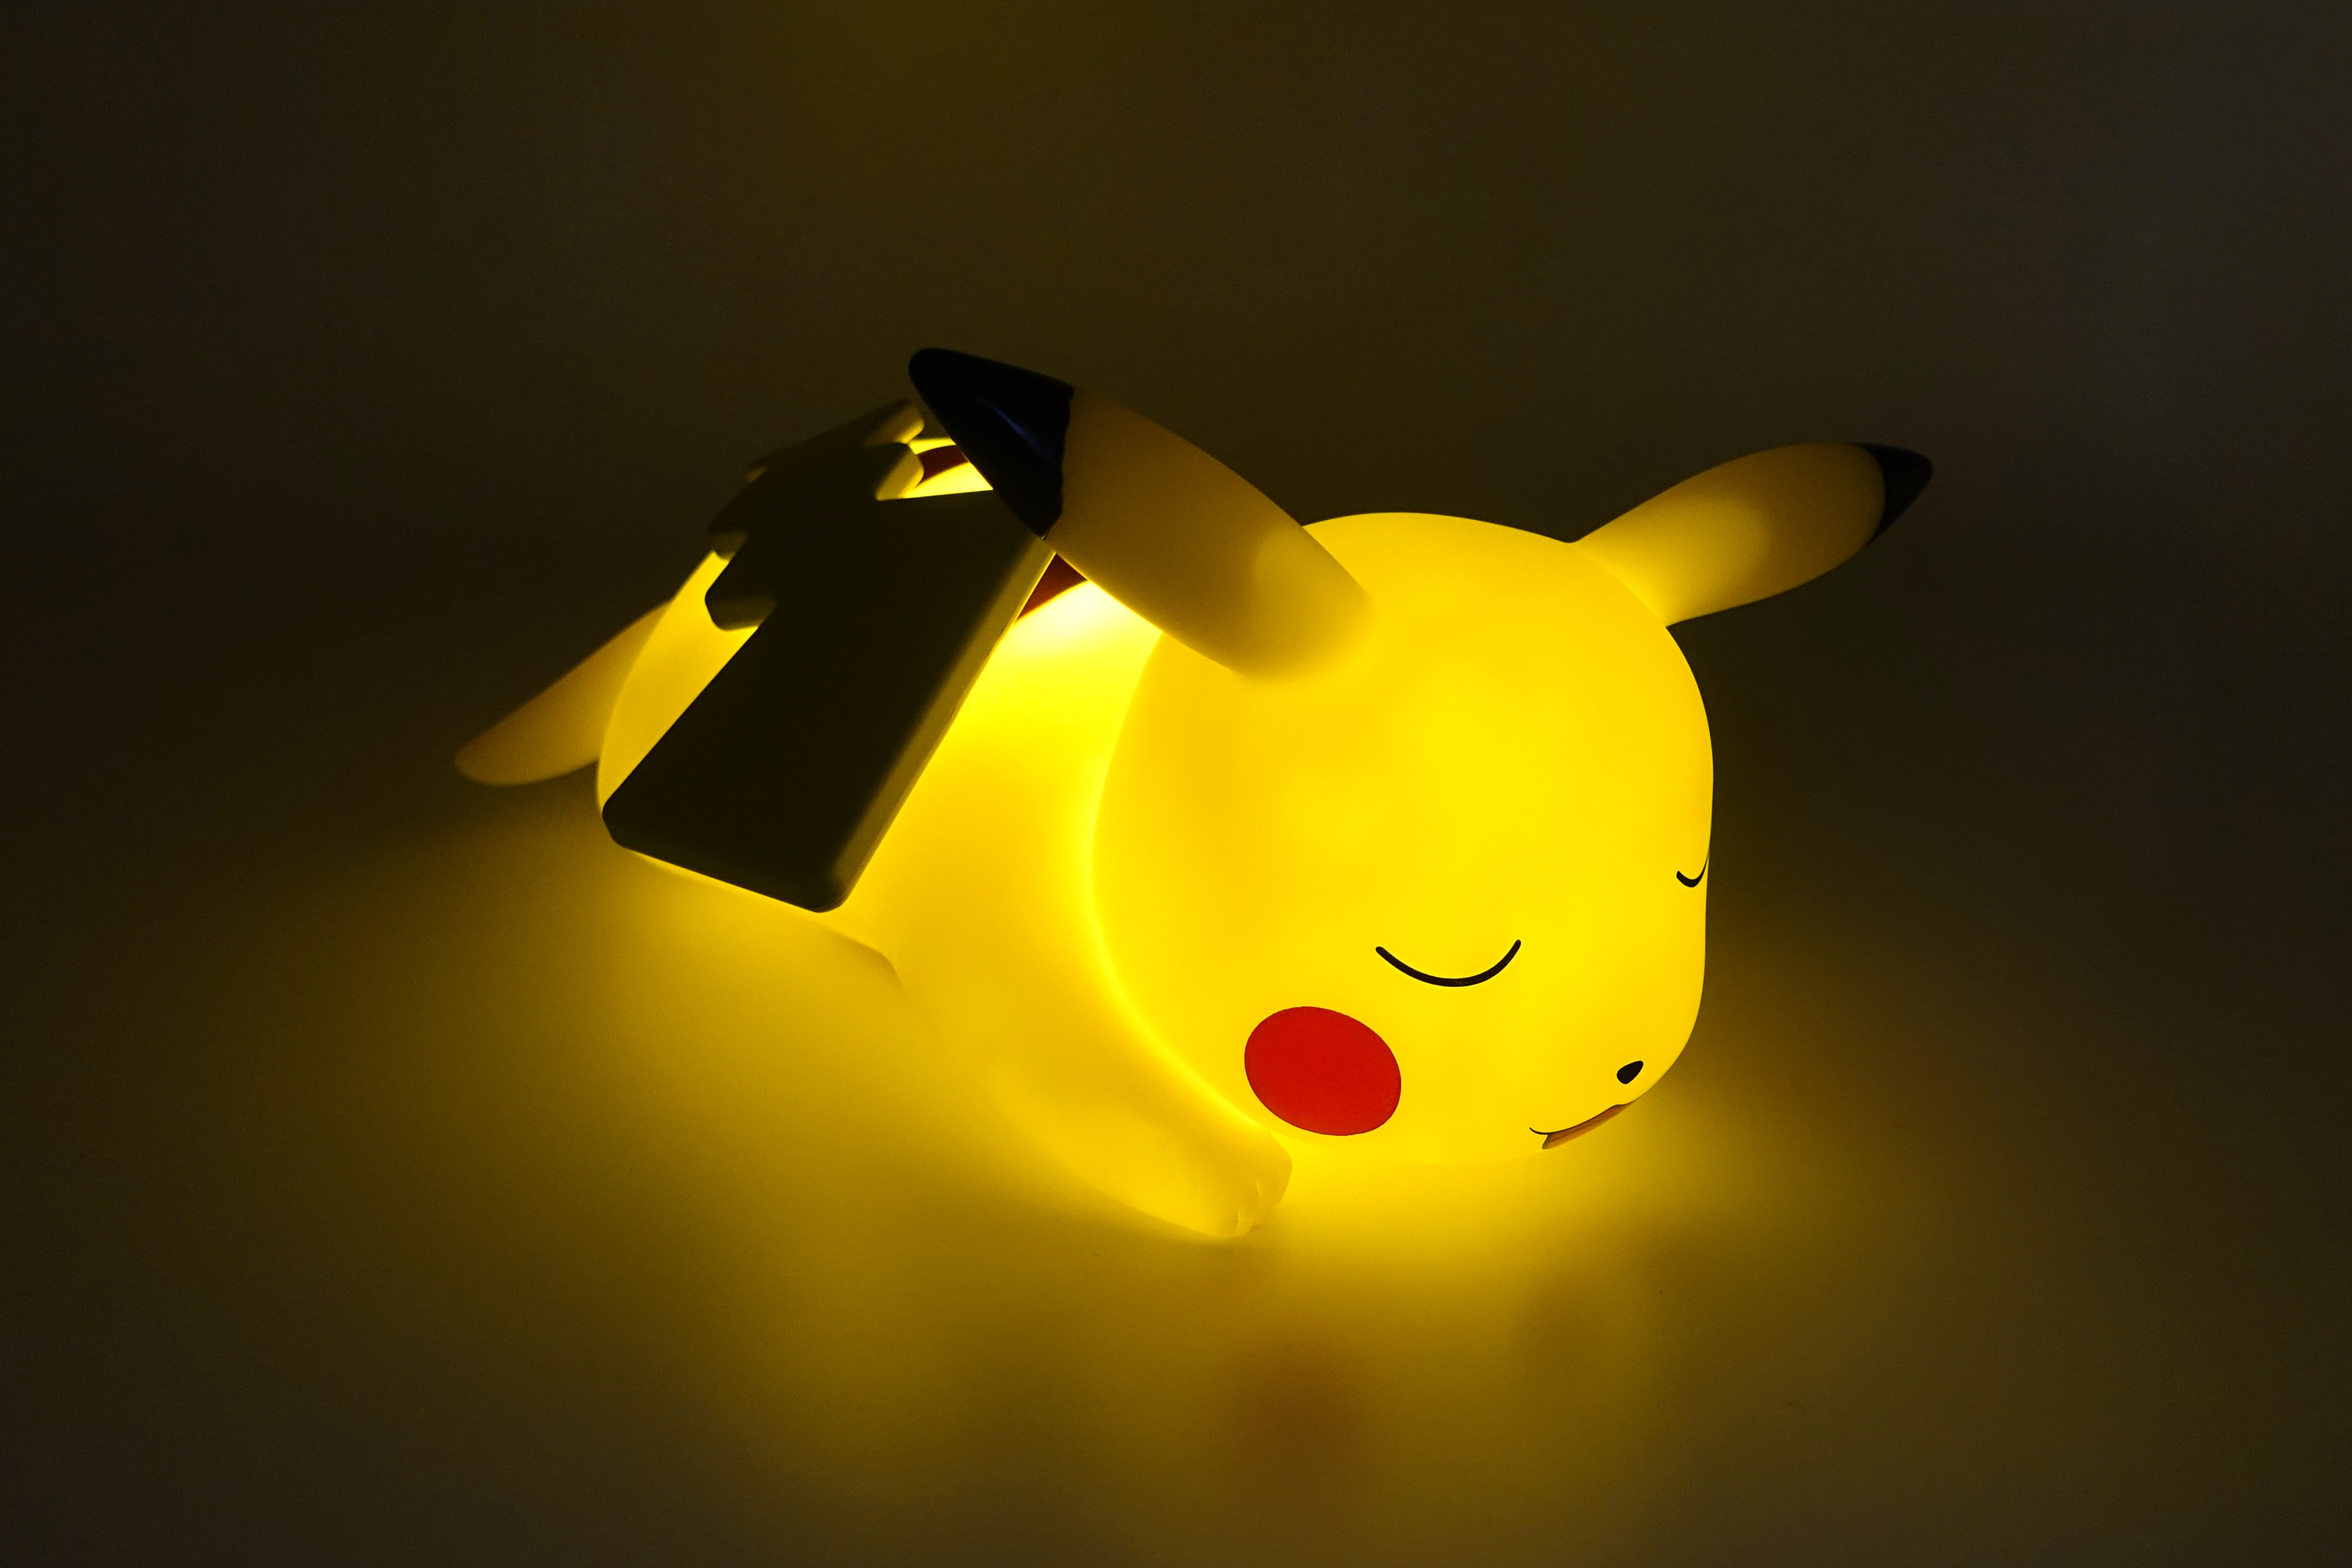 POKEMON - Pikachu Pokeball - Réveil avec lampe LED : : Lampe  Teknofun Pokemon